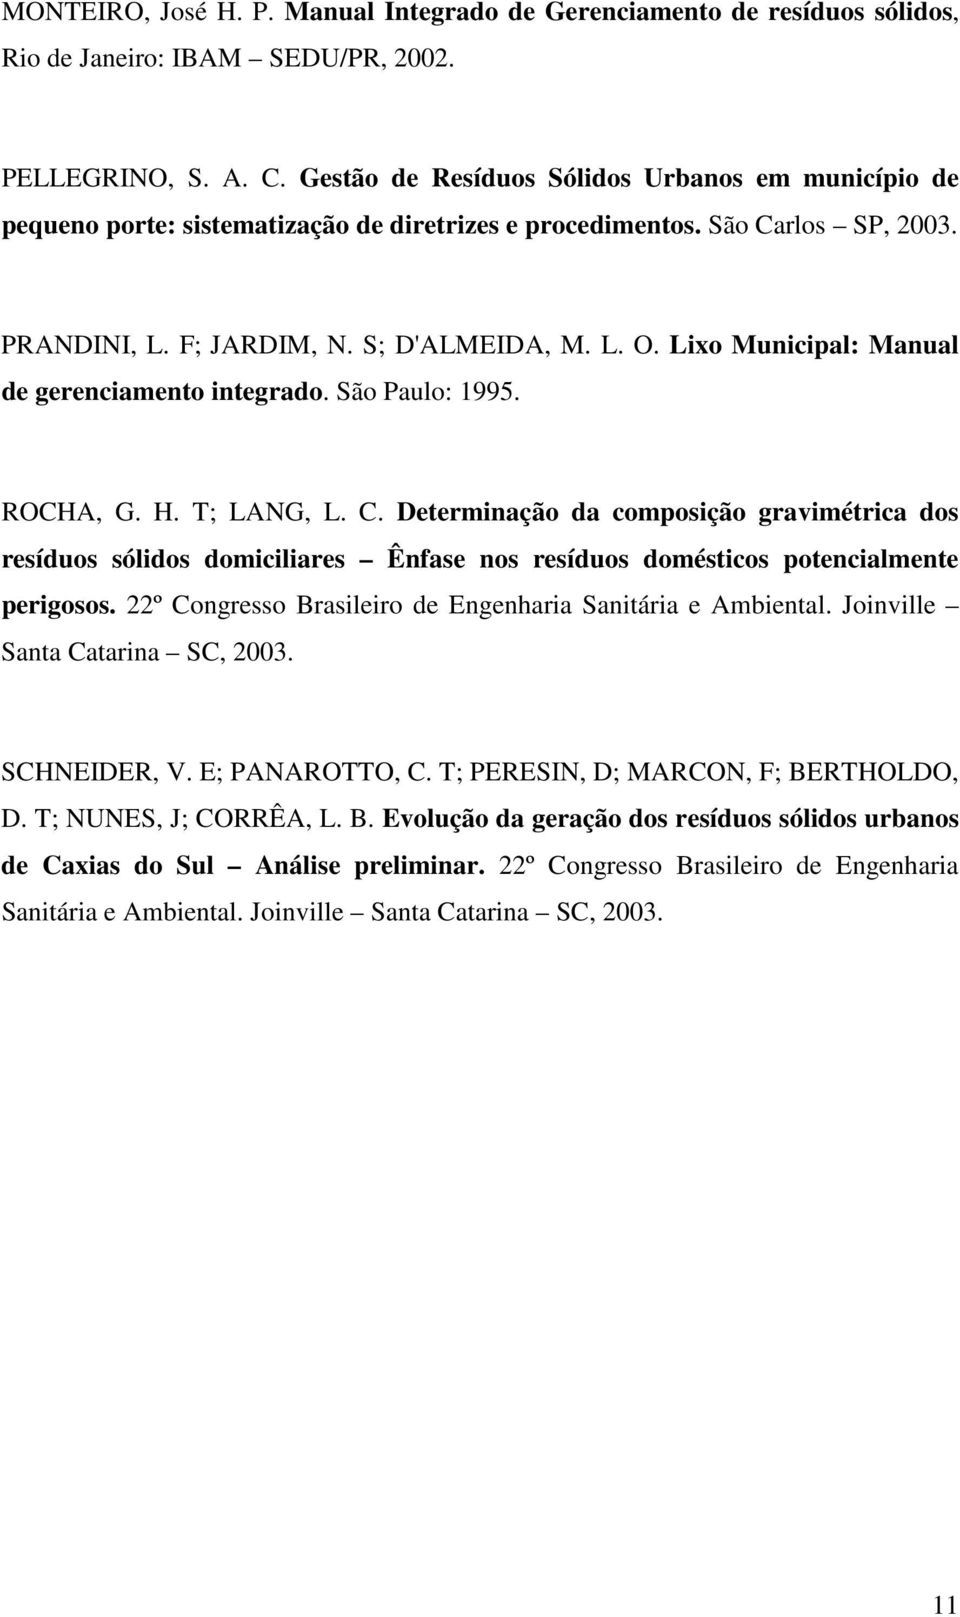 Lixo Municipal: Manual de gerenciamento integrado. São Paulo: 1995. ROCHA, G. H. T; LANG, L. C.